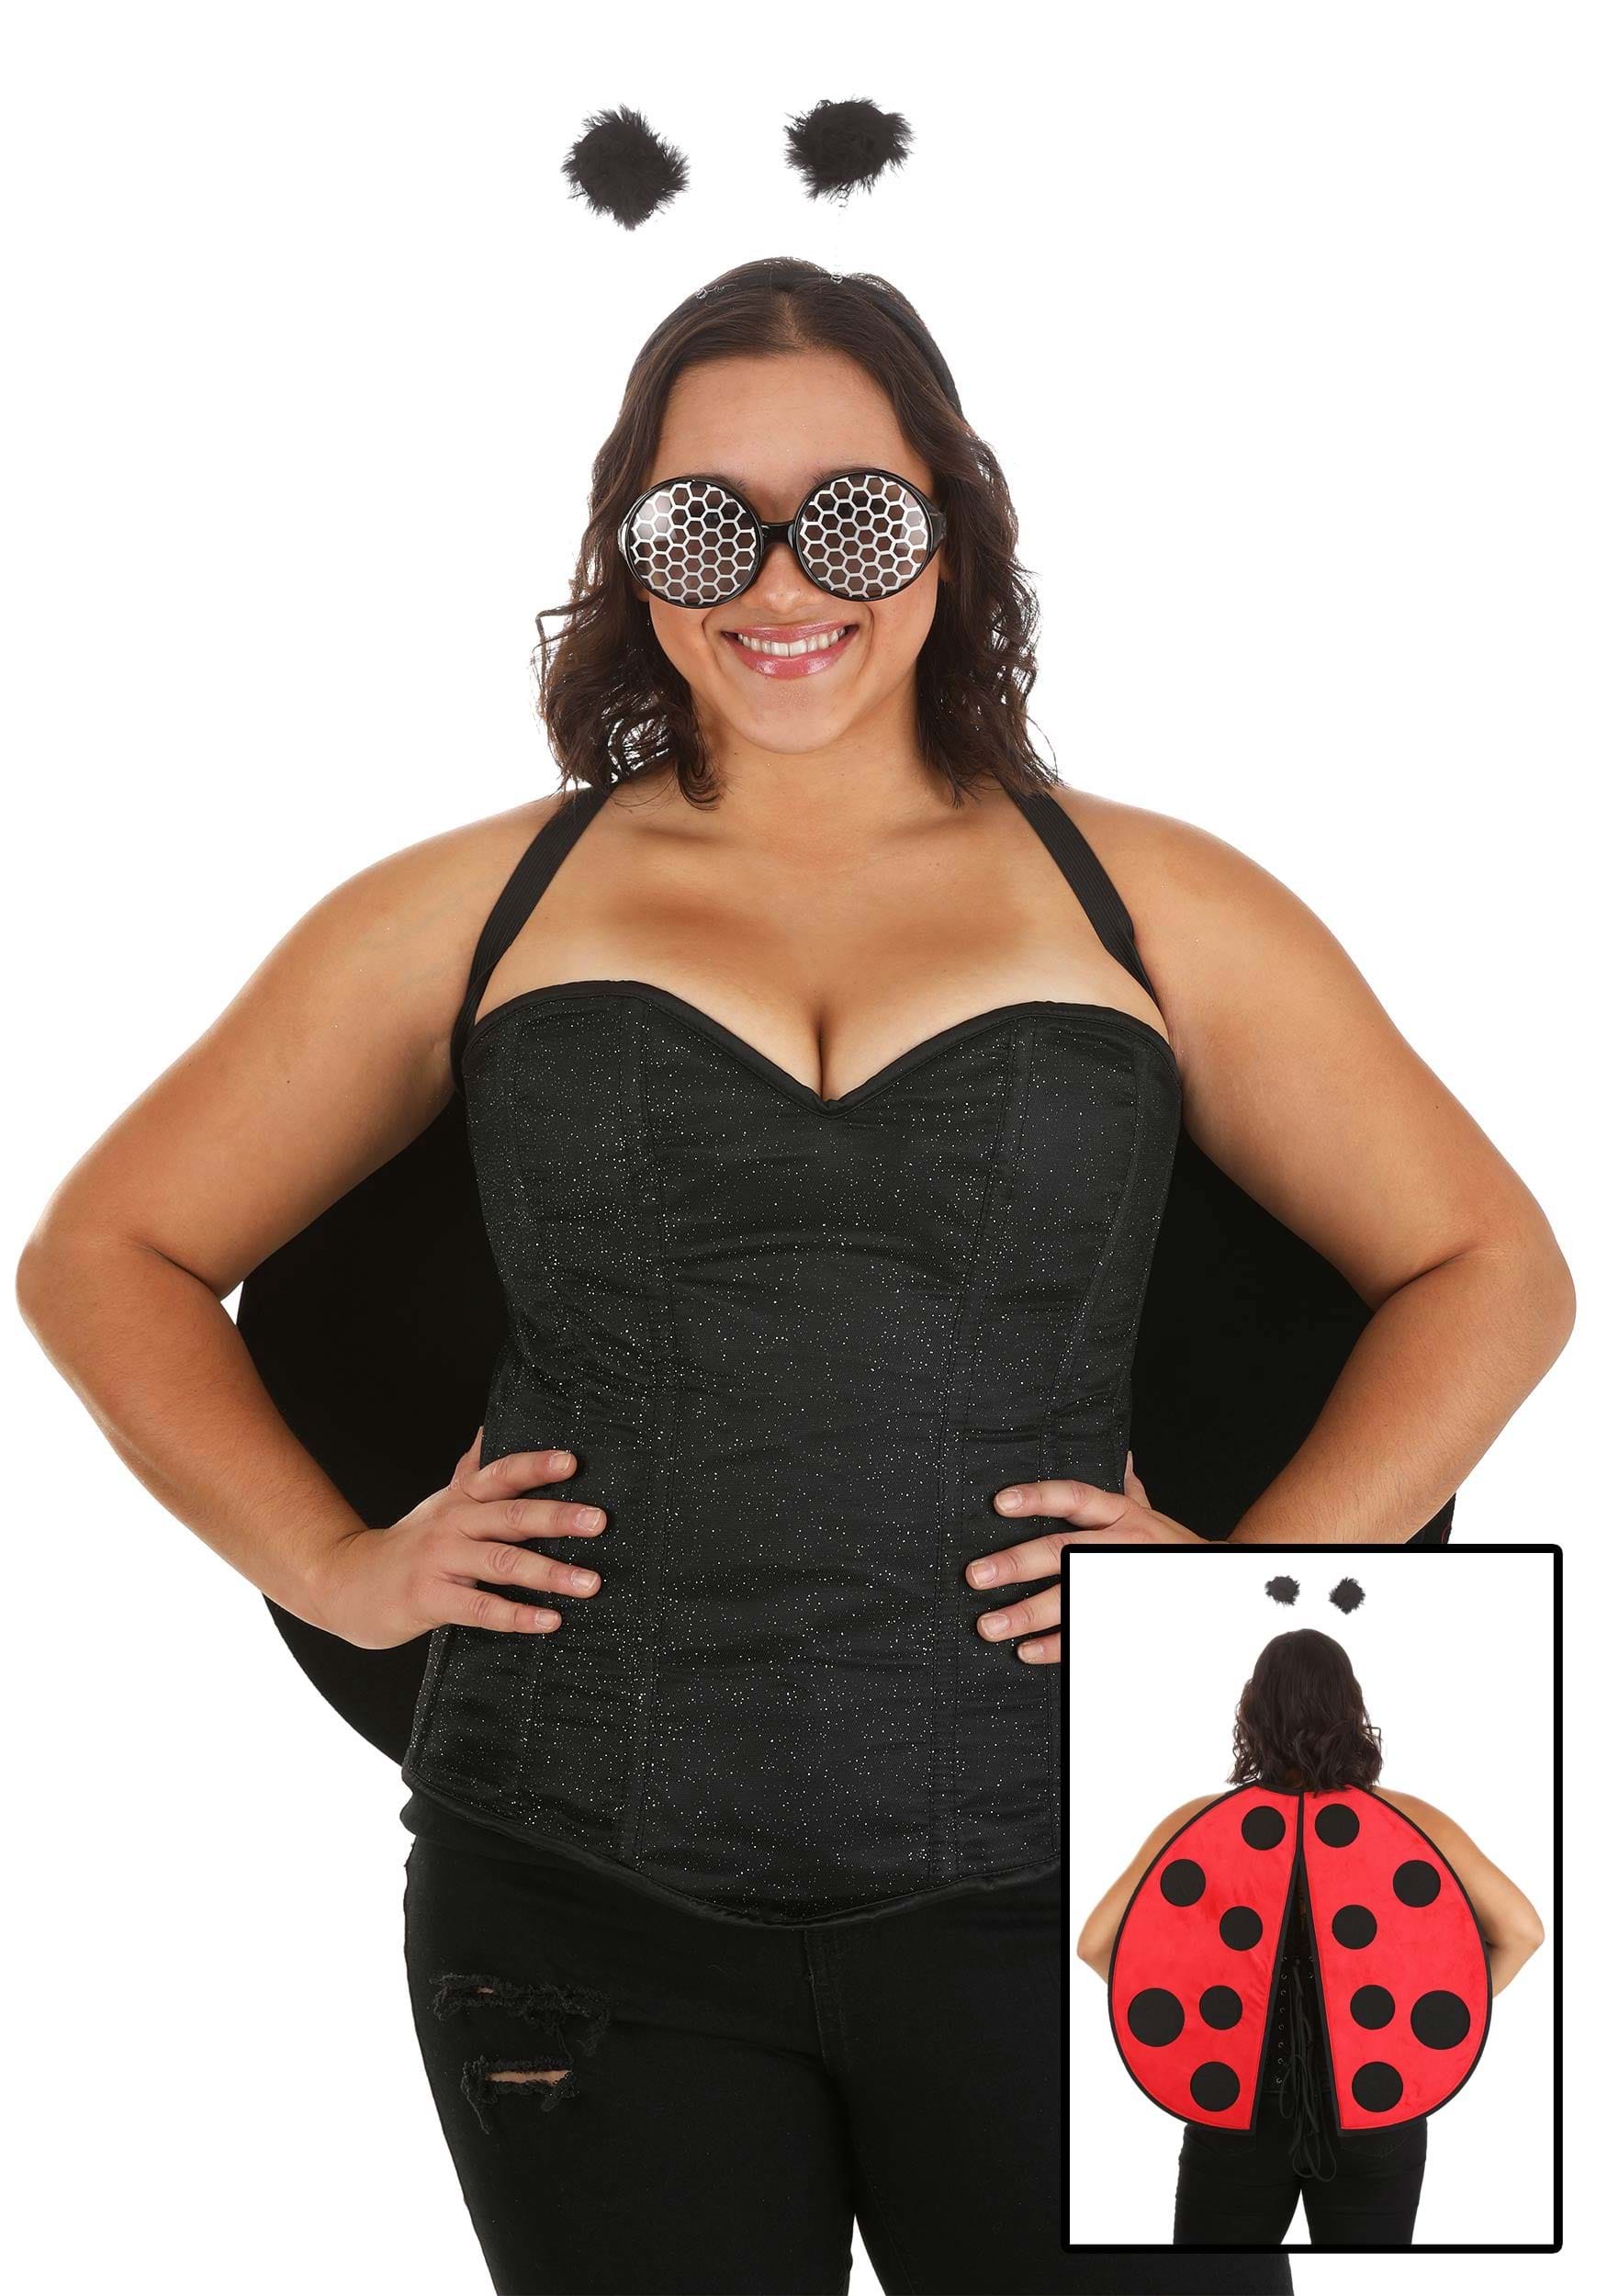 1 Set Ladybug Costume Accessories Including Ladybug Wing Ladybug Headband  and Ladybug Mask 